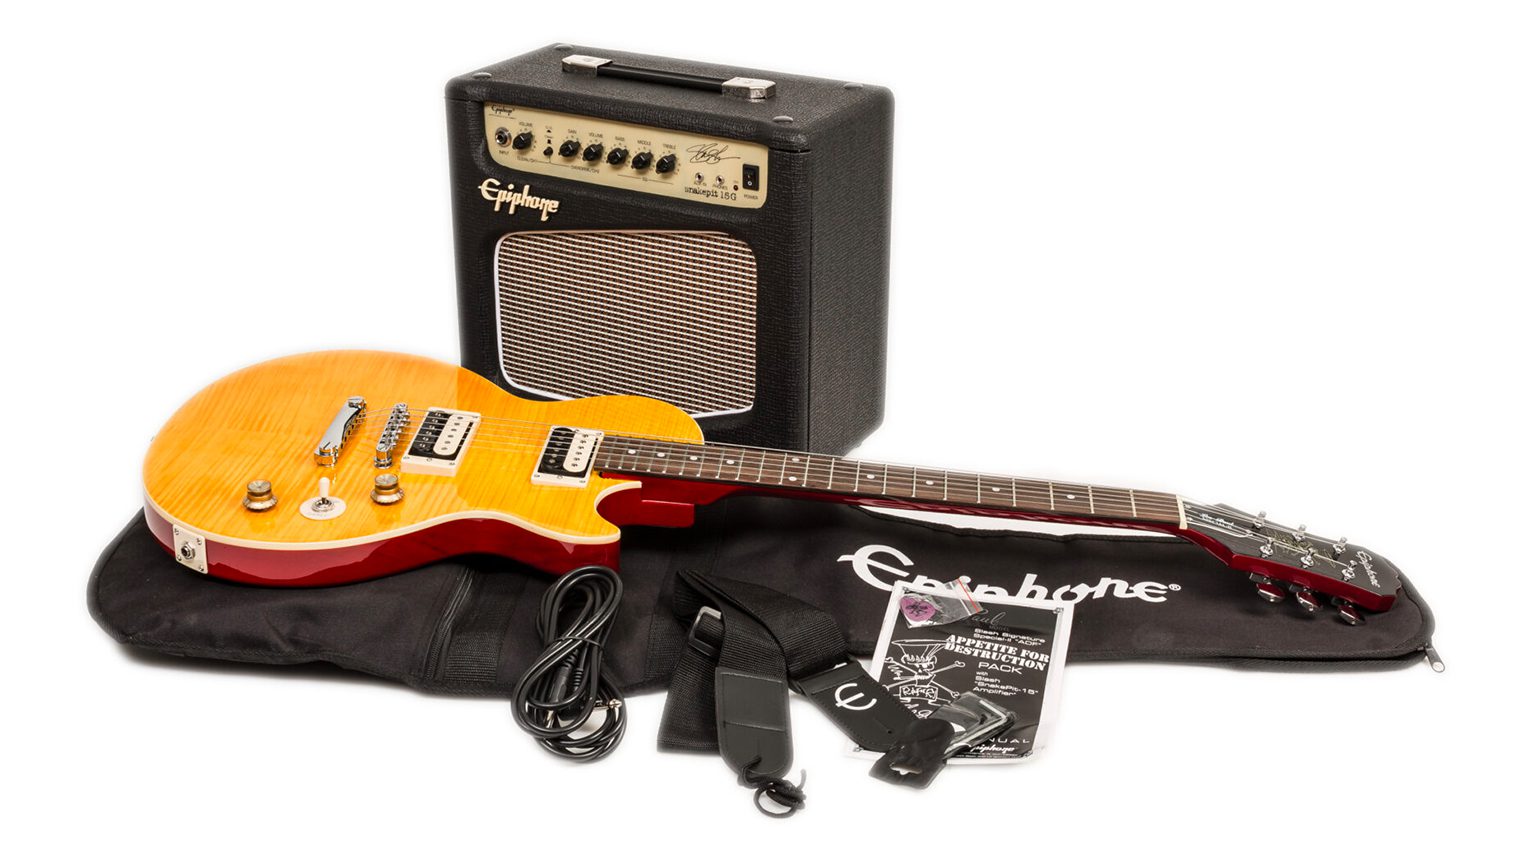 Epiphone Slash AFD LP Performance Pack Guitar for beginners